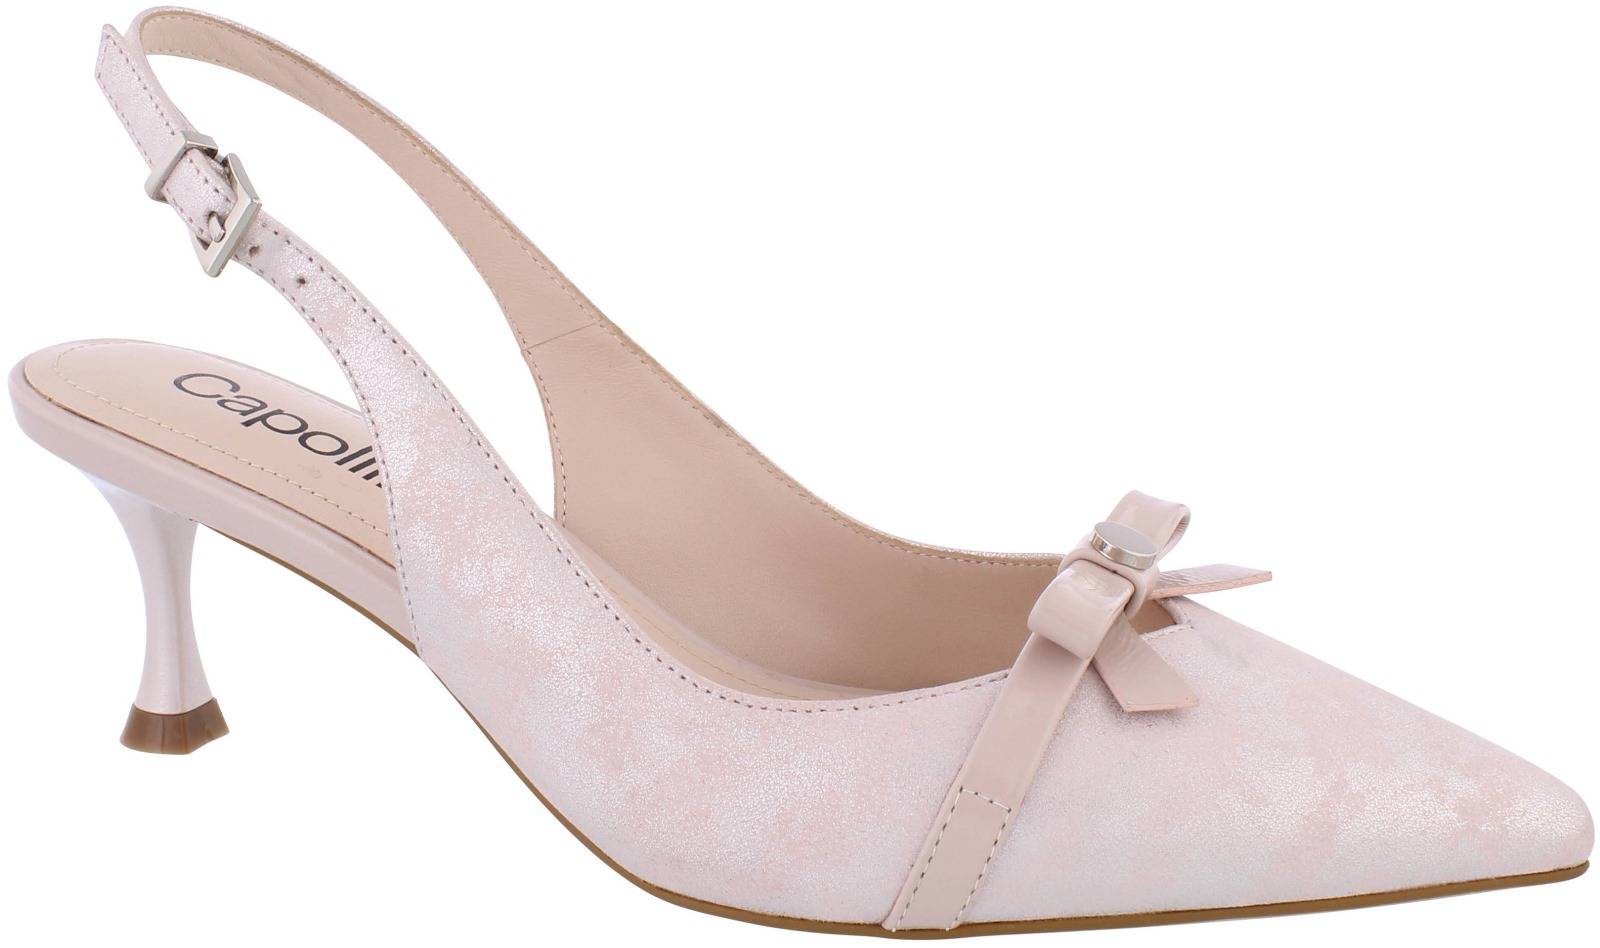 Allegra Pink Sling Shoe